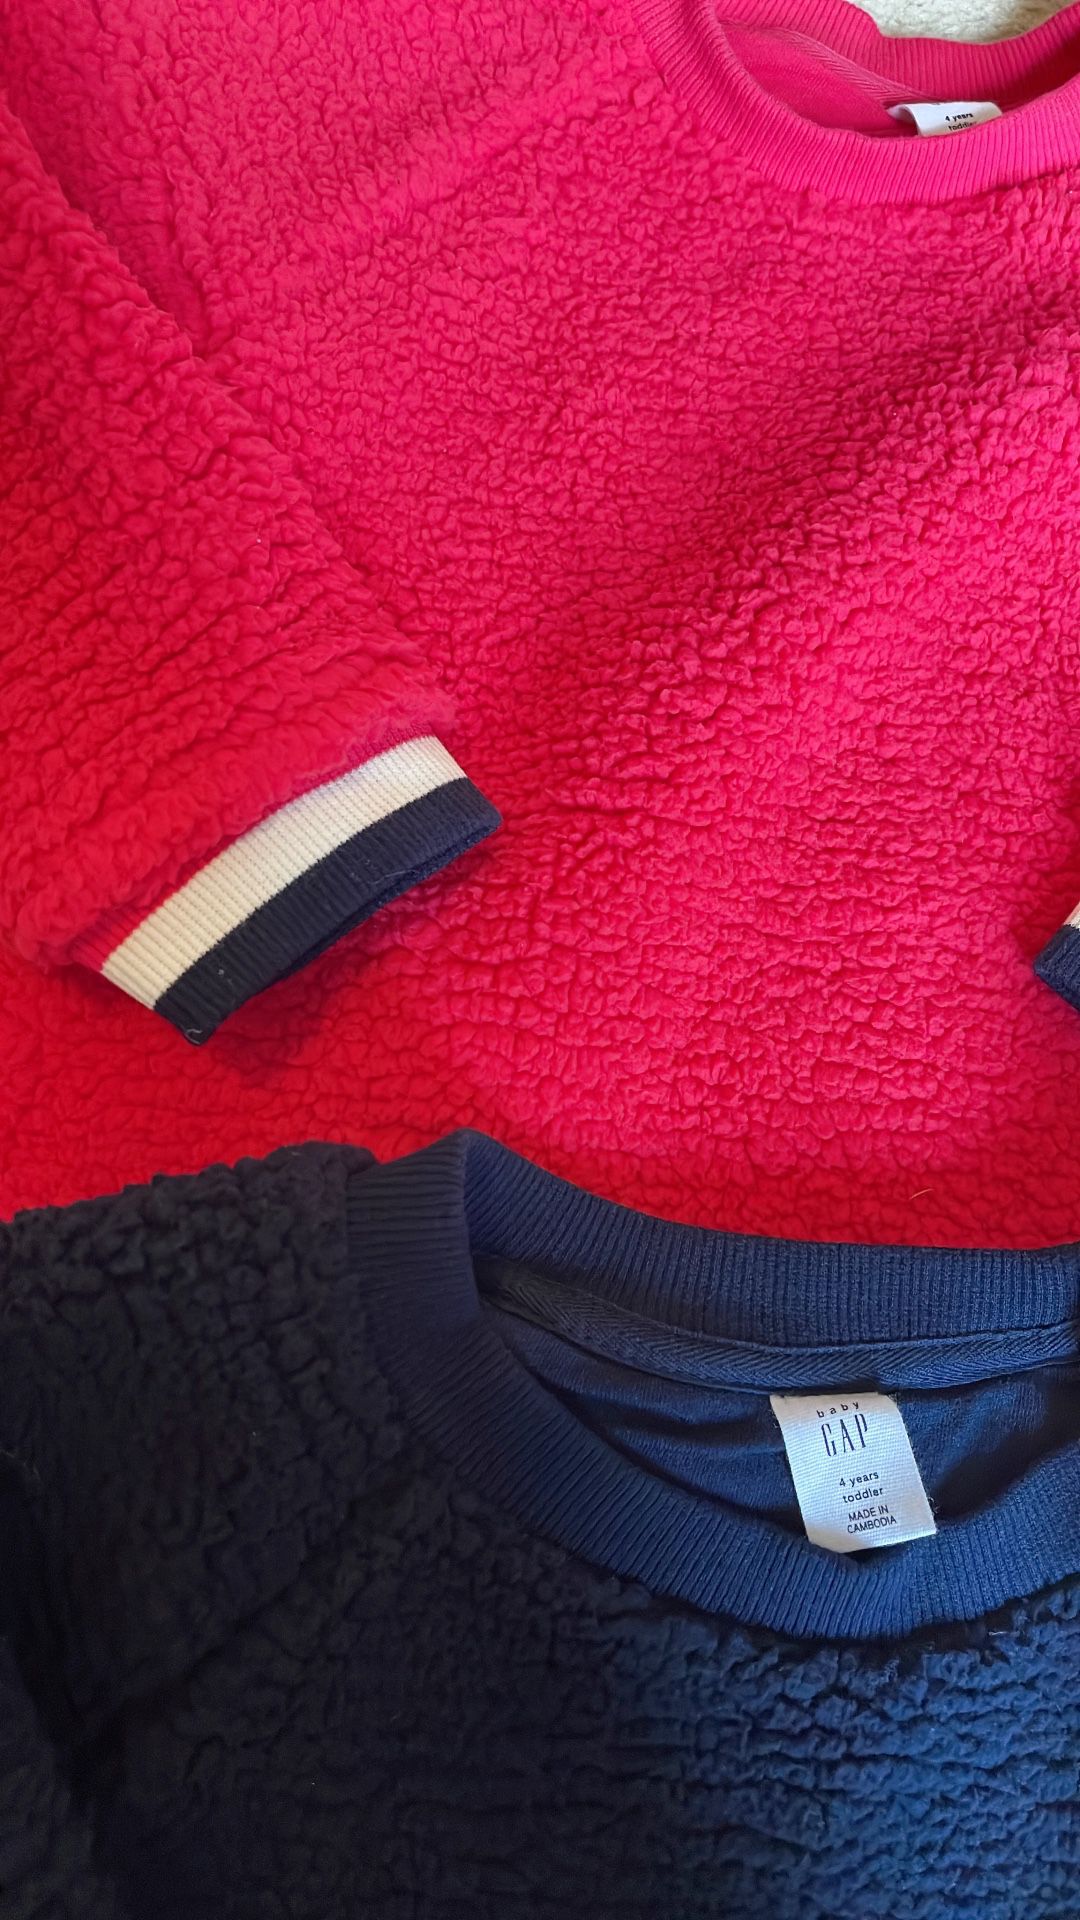 Bundle of BabyGAP Sweater Sweatshirts Pink and Navy, 4T